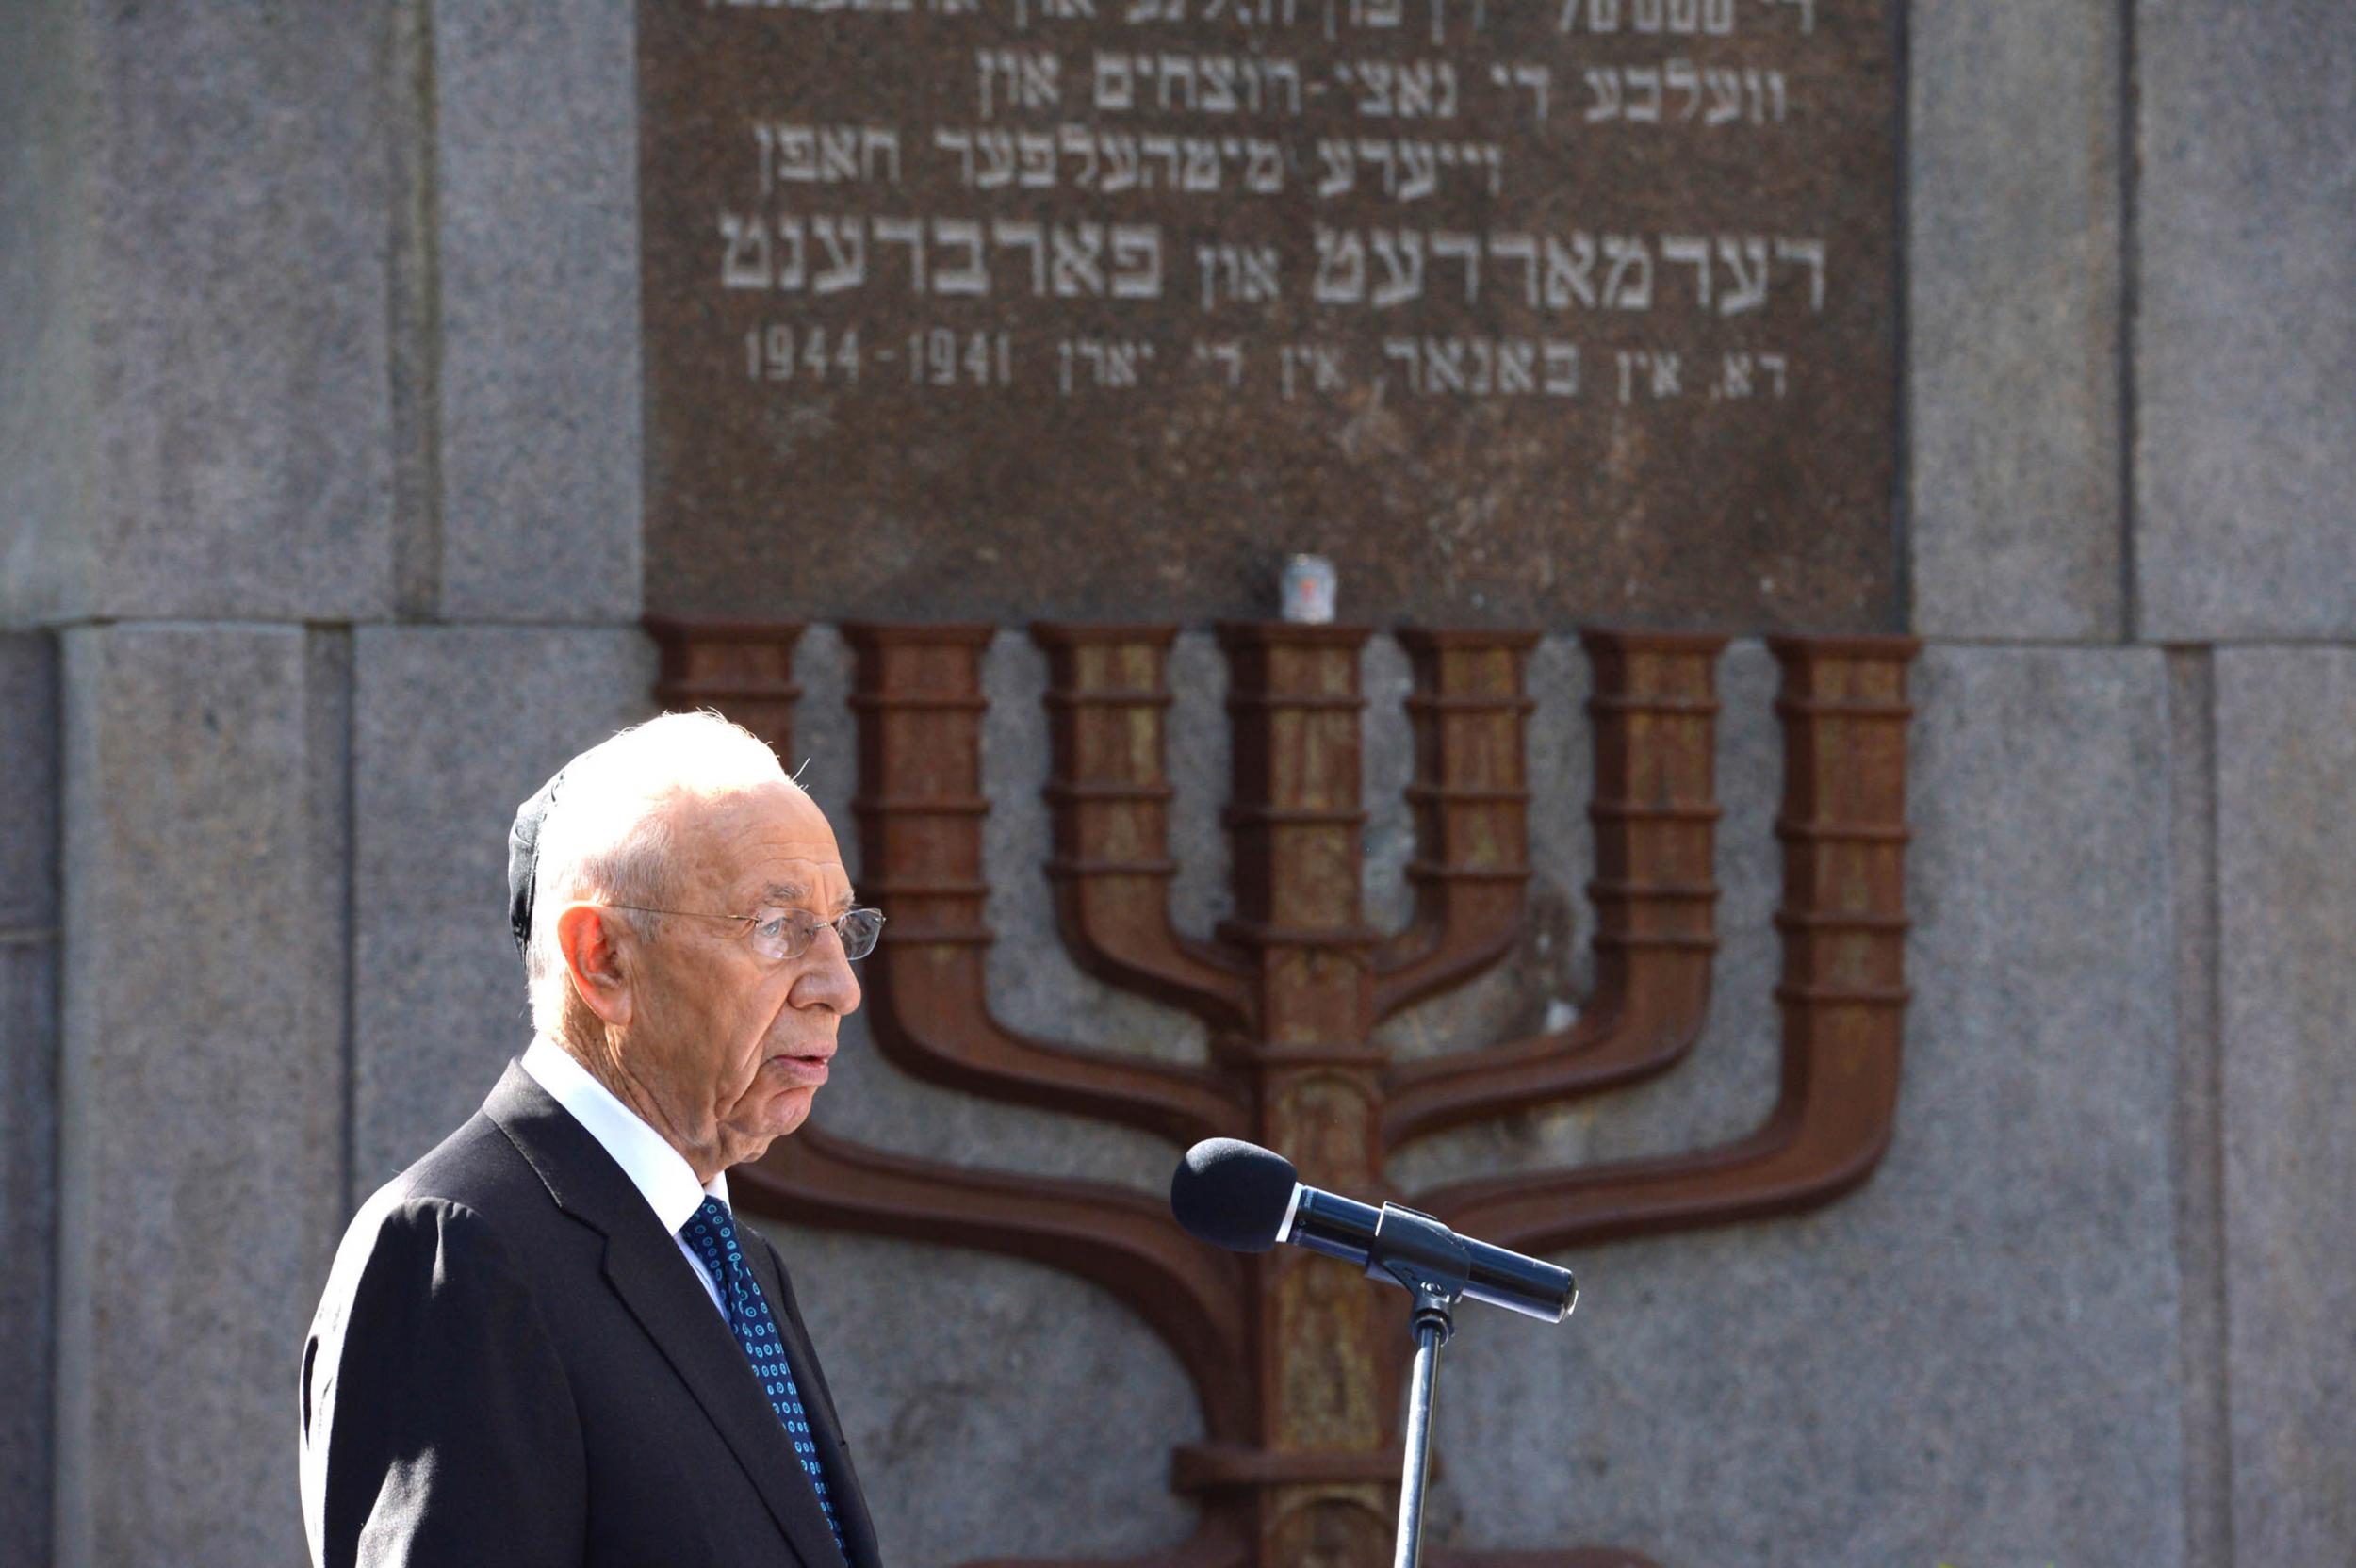 Israeli statesman and Nobel Peace Prize recipient Shimon Peres